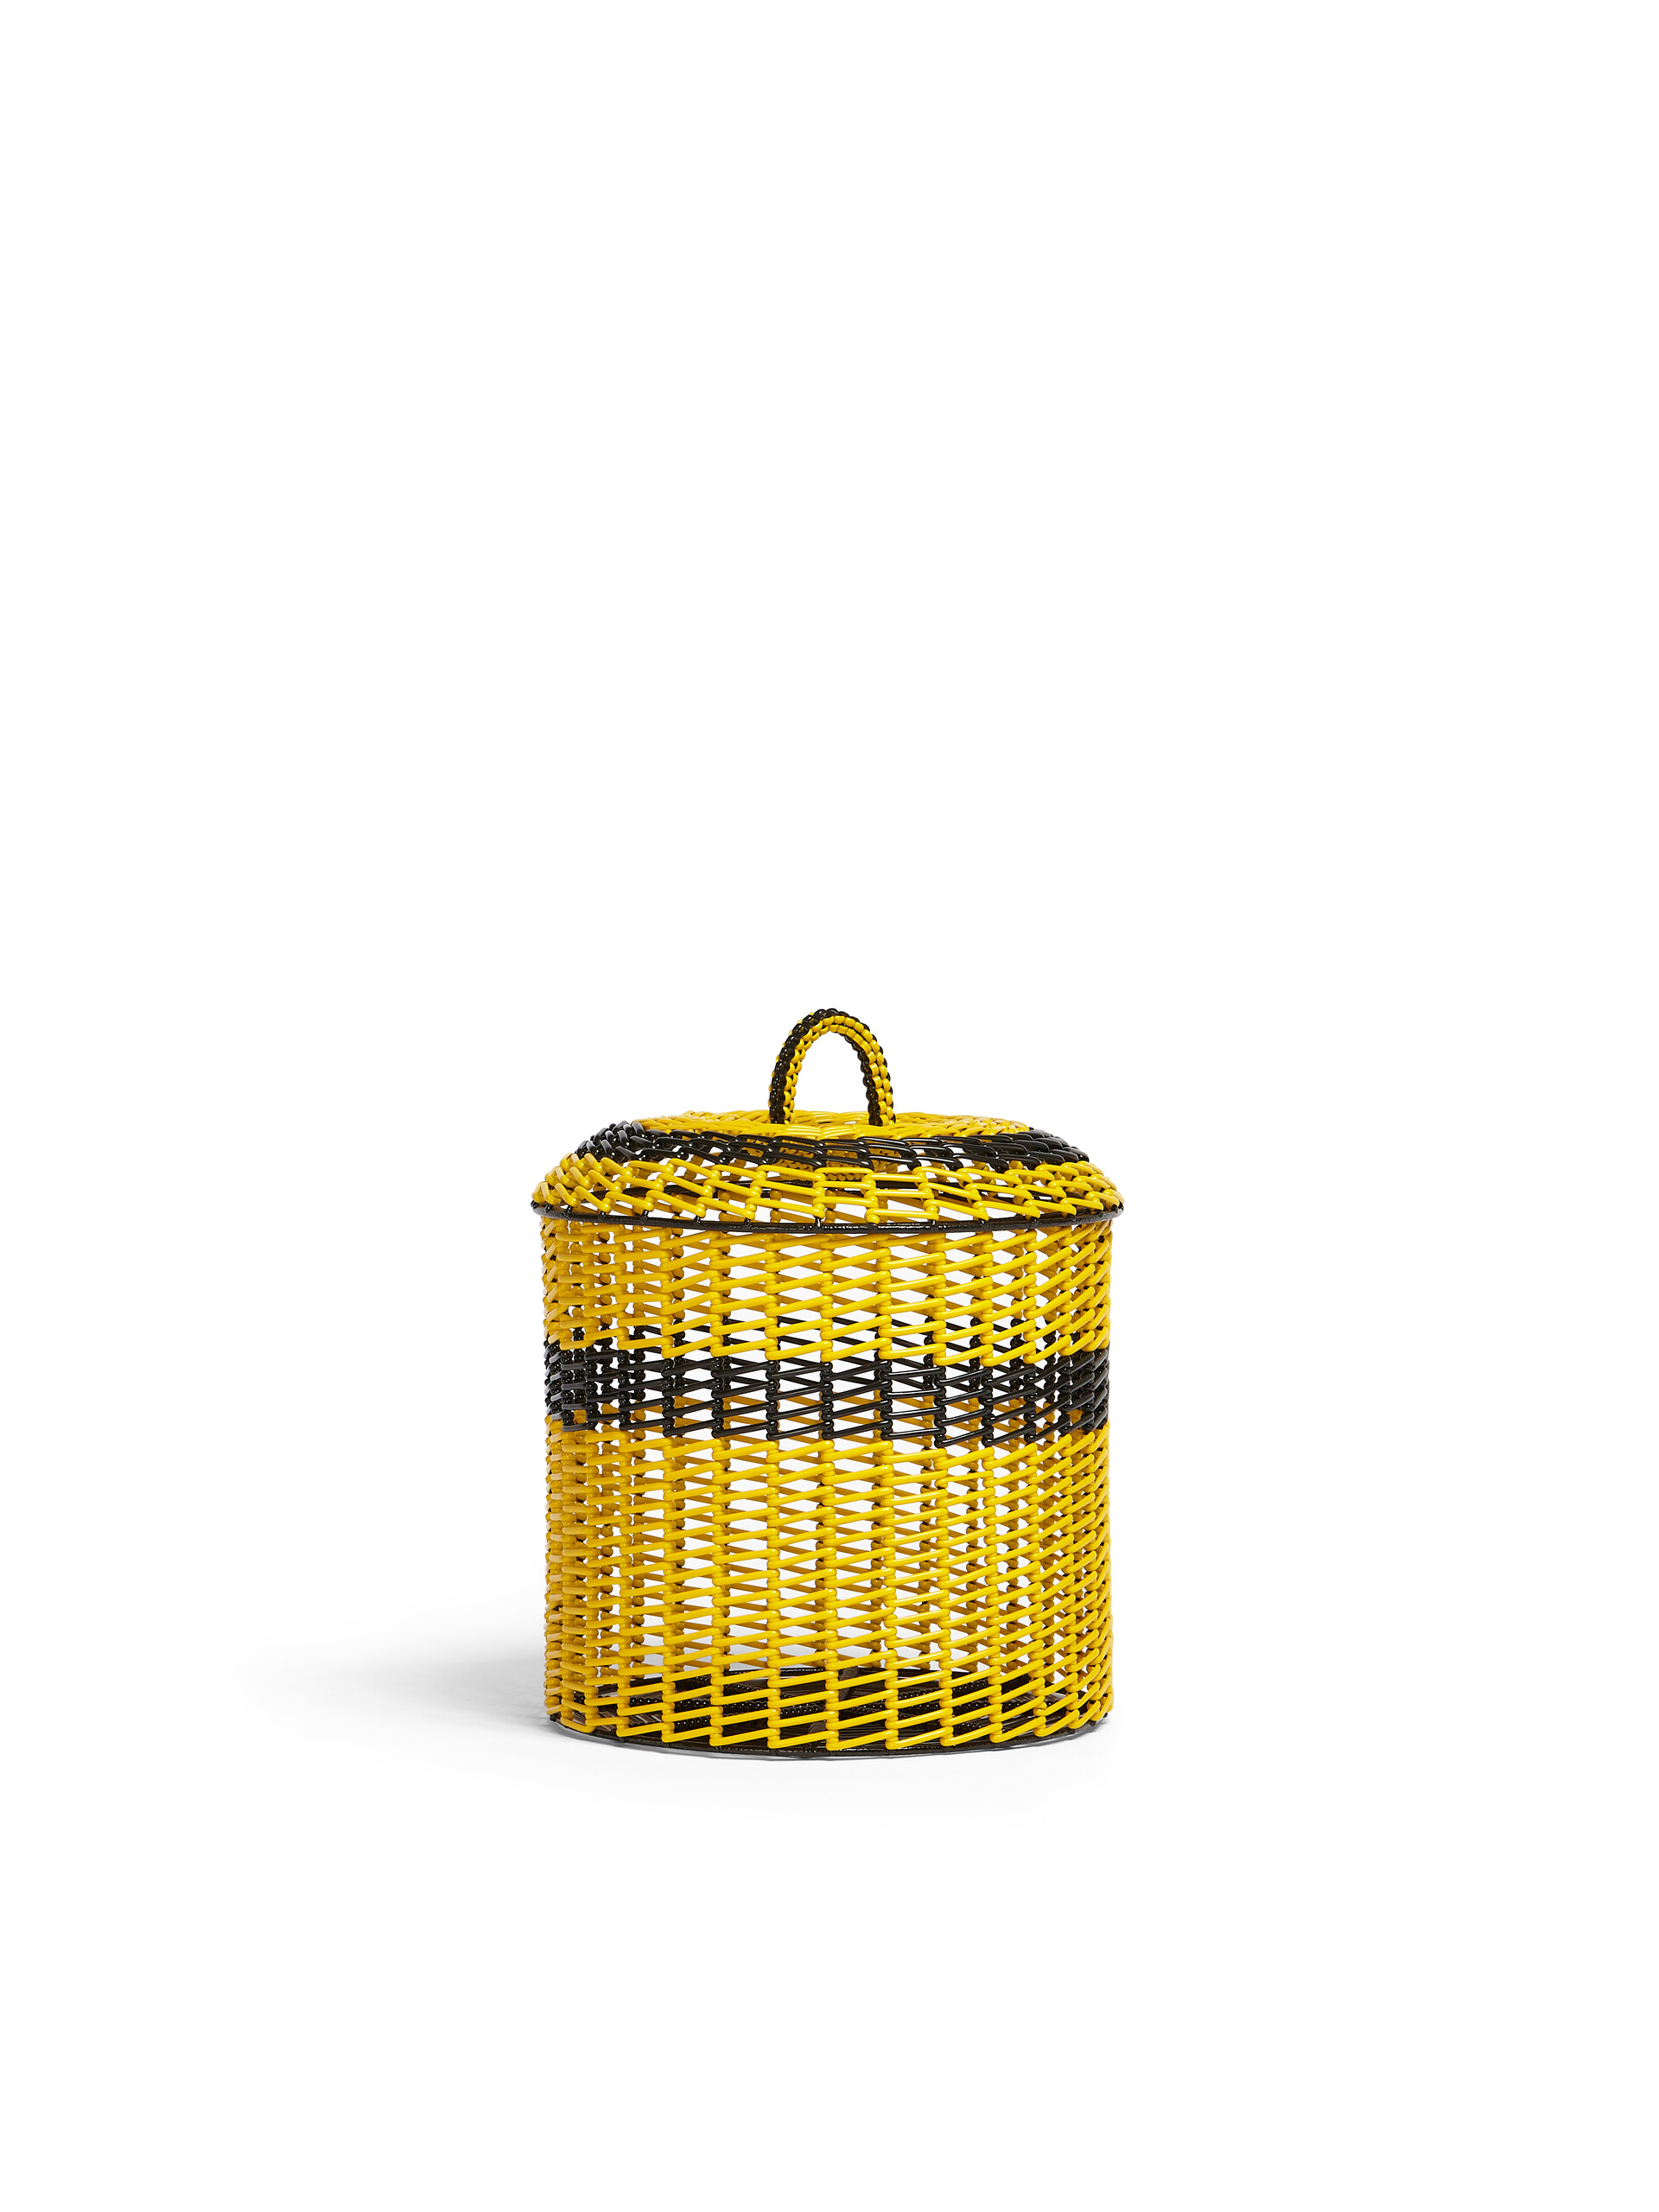 MARNI MARKET yellow and black small case - Accessories - Image 2